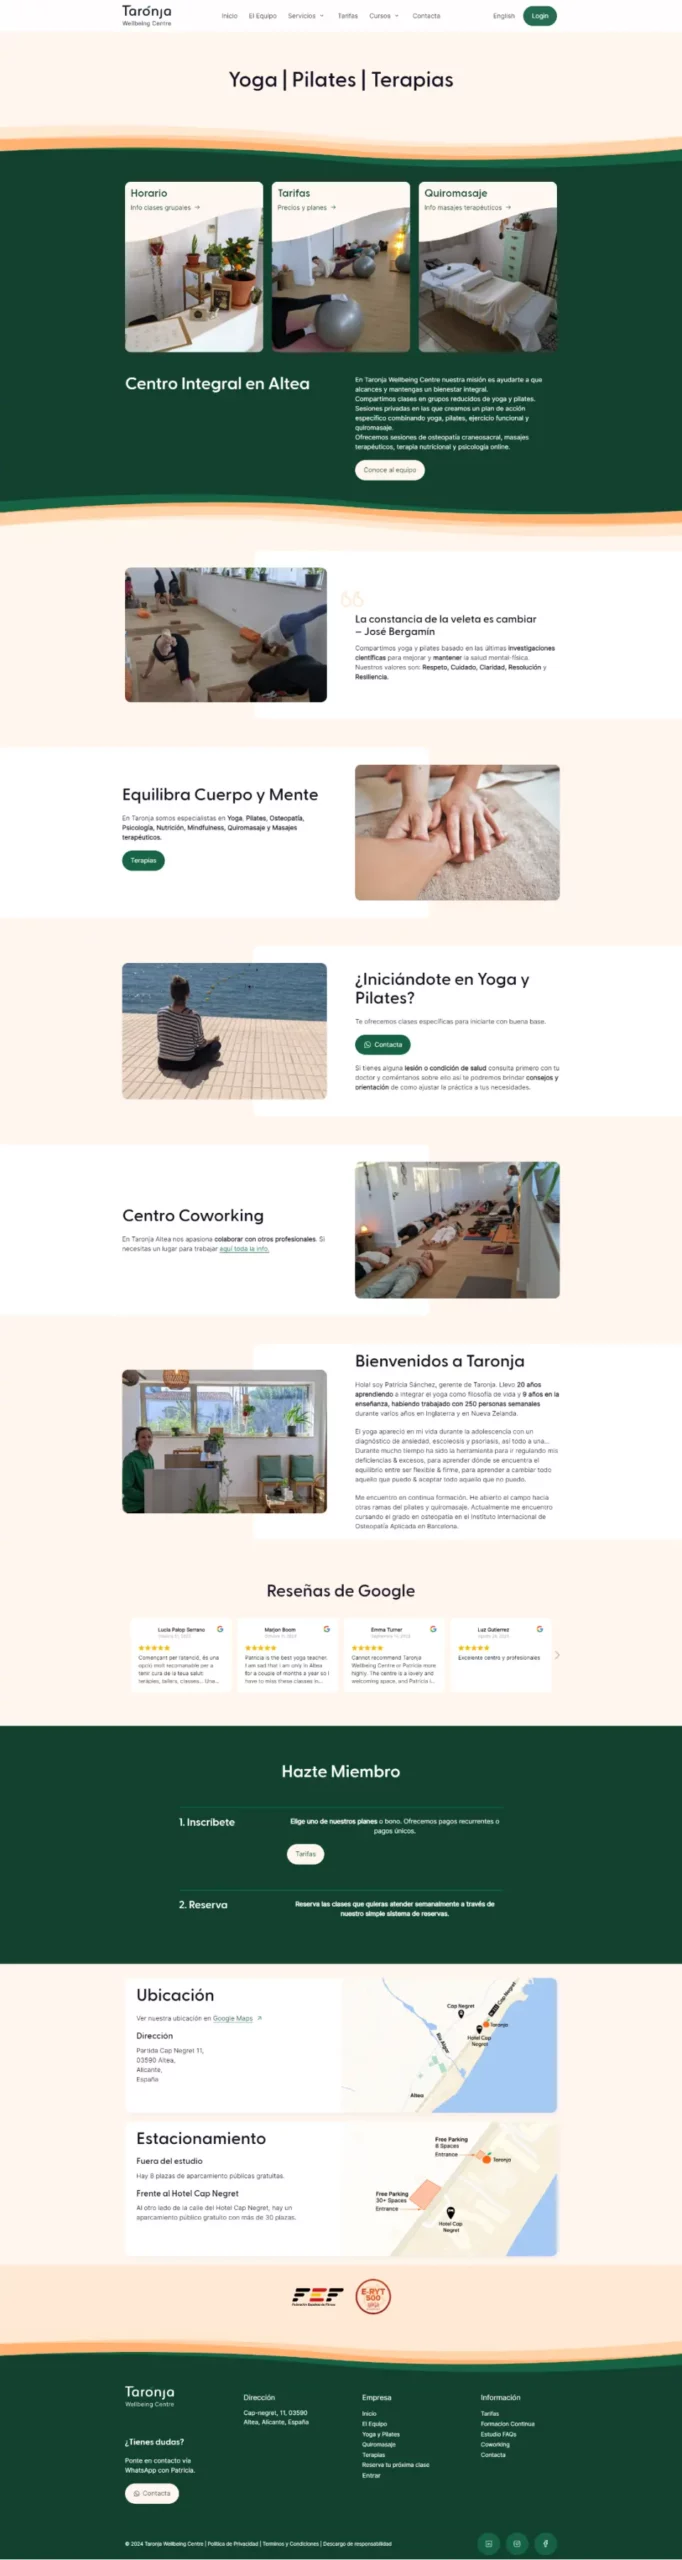 taronja wellbeing centre homepage